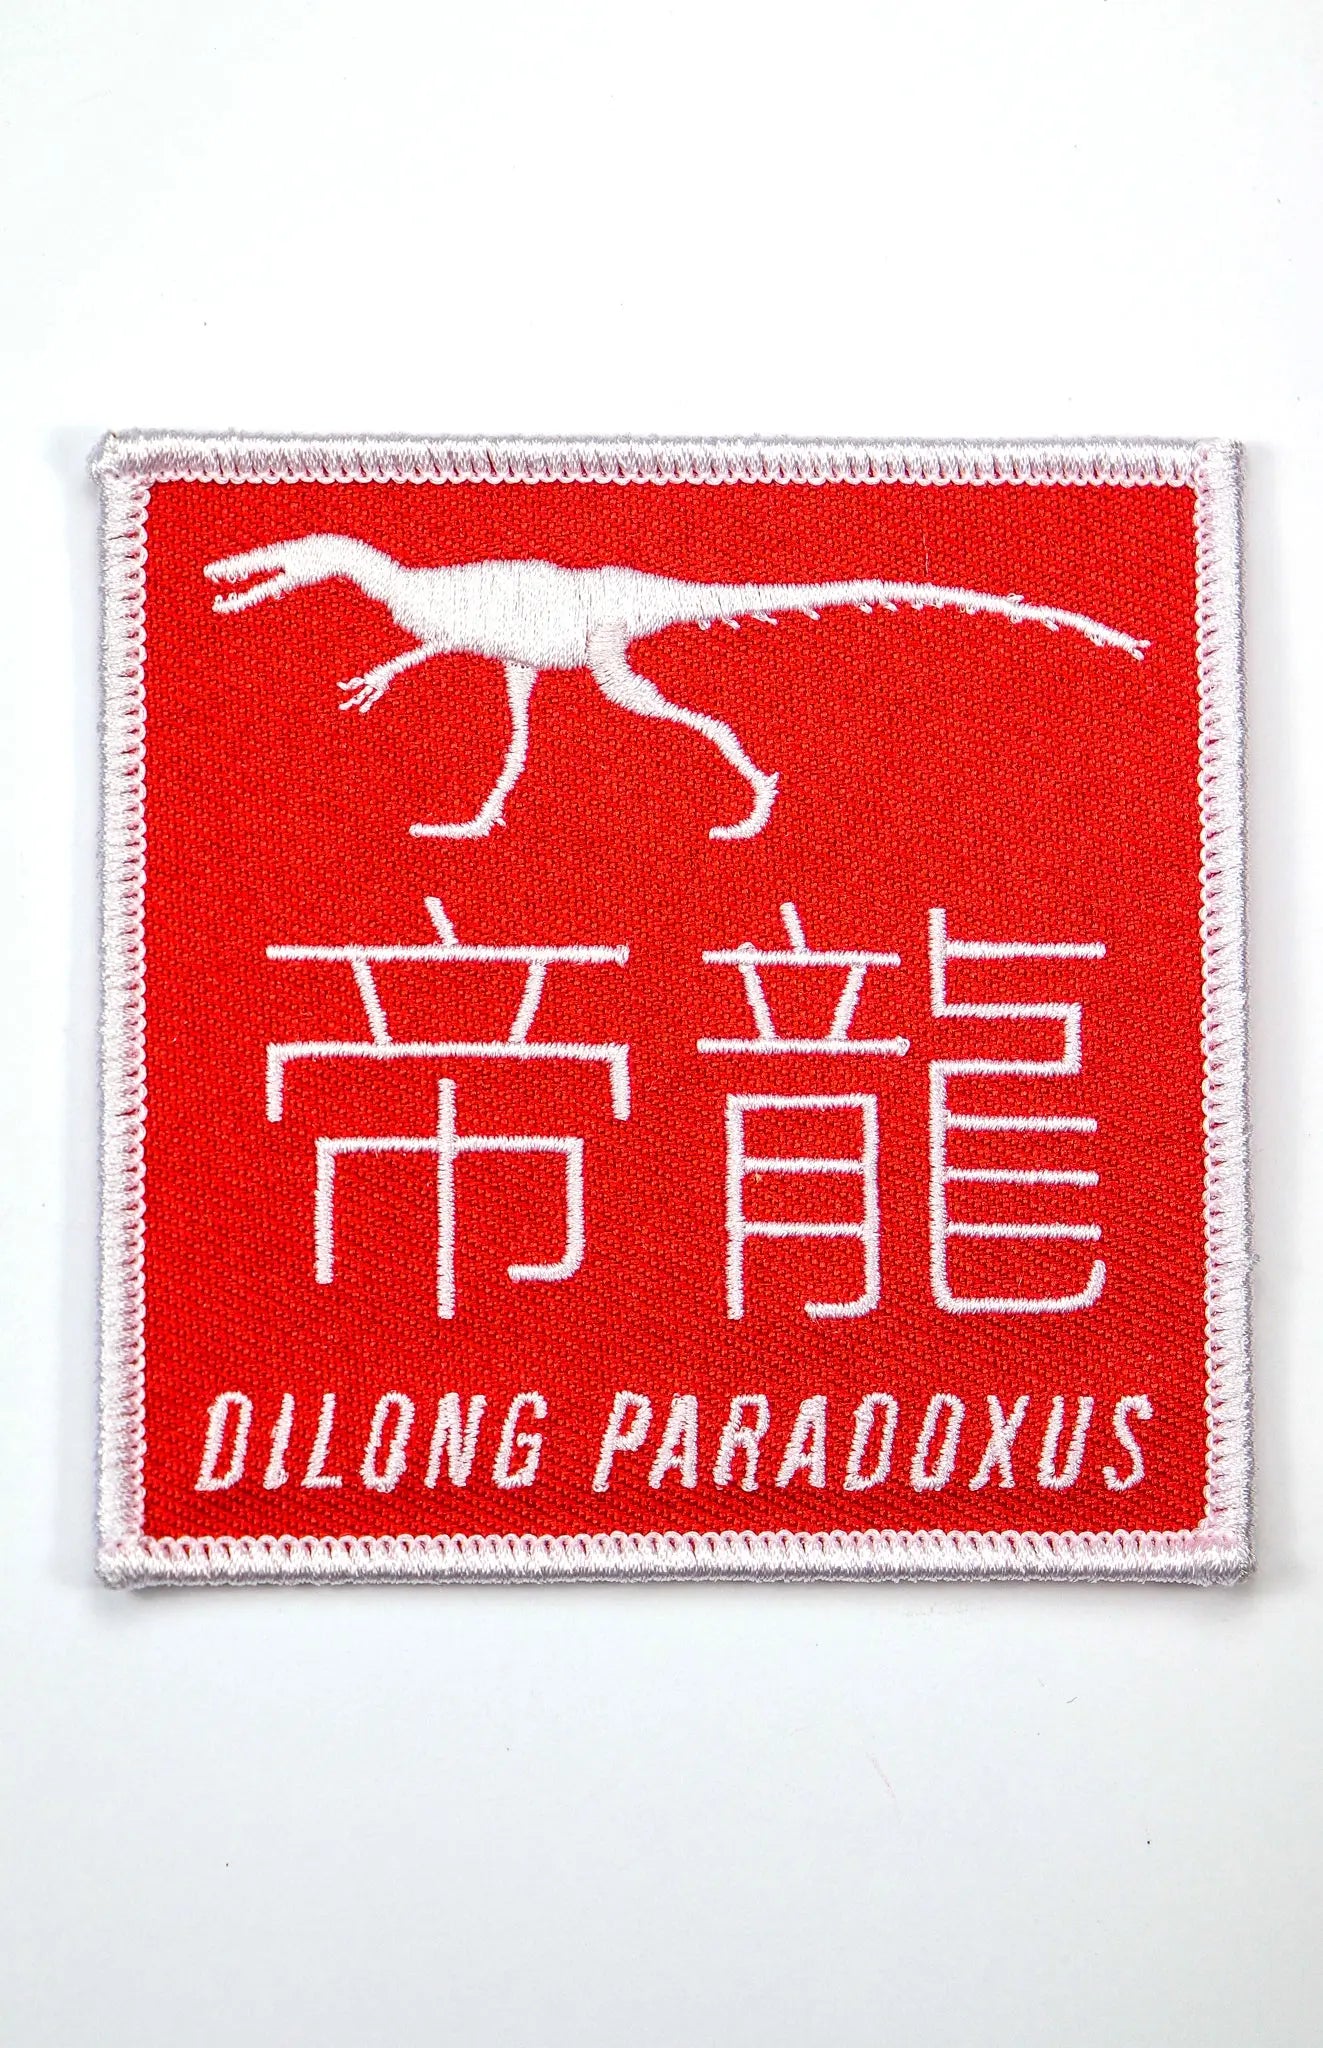 Dilong Paradoxus Dinosaur Patch - Stemcell Science Shop